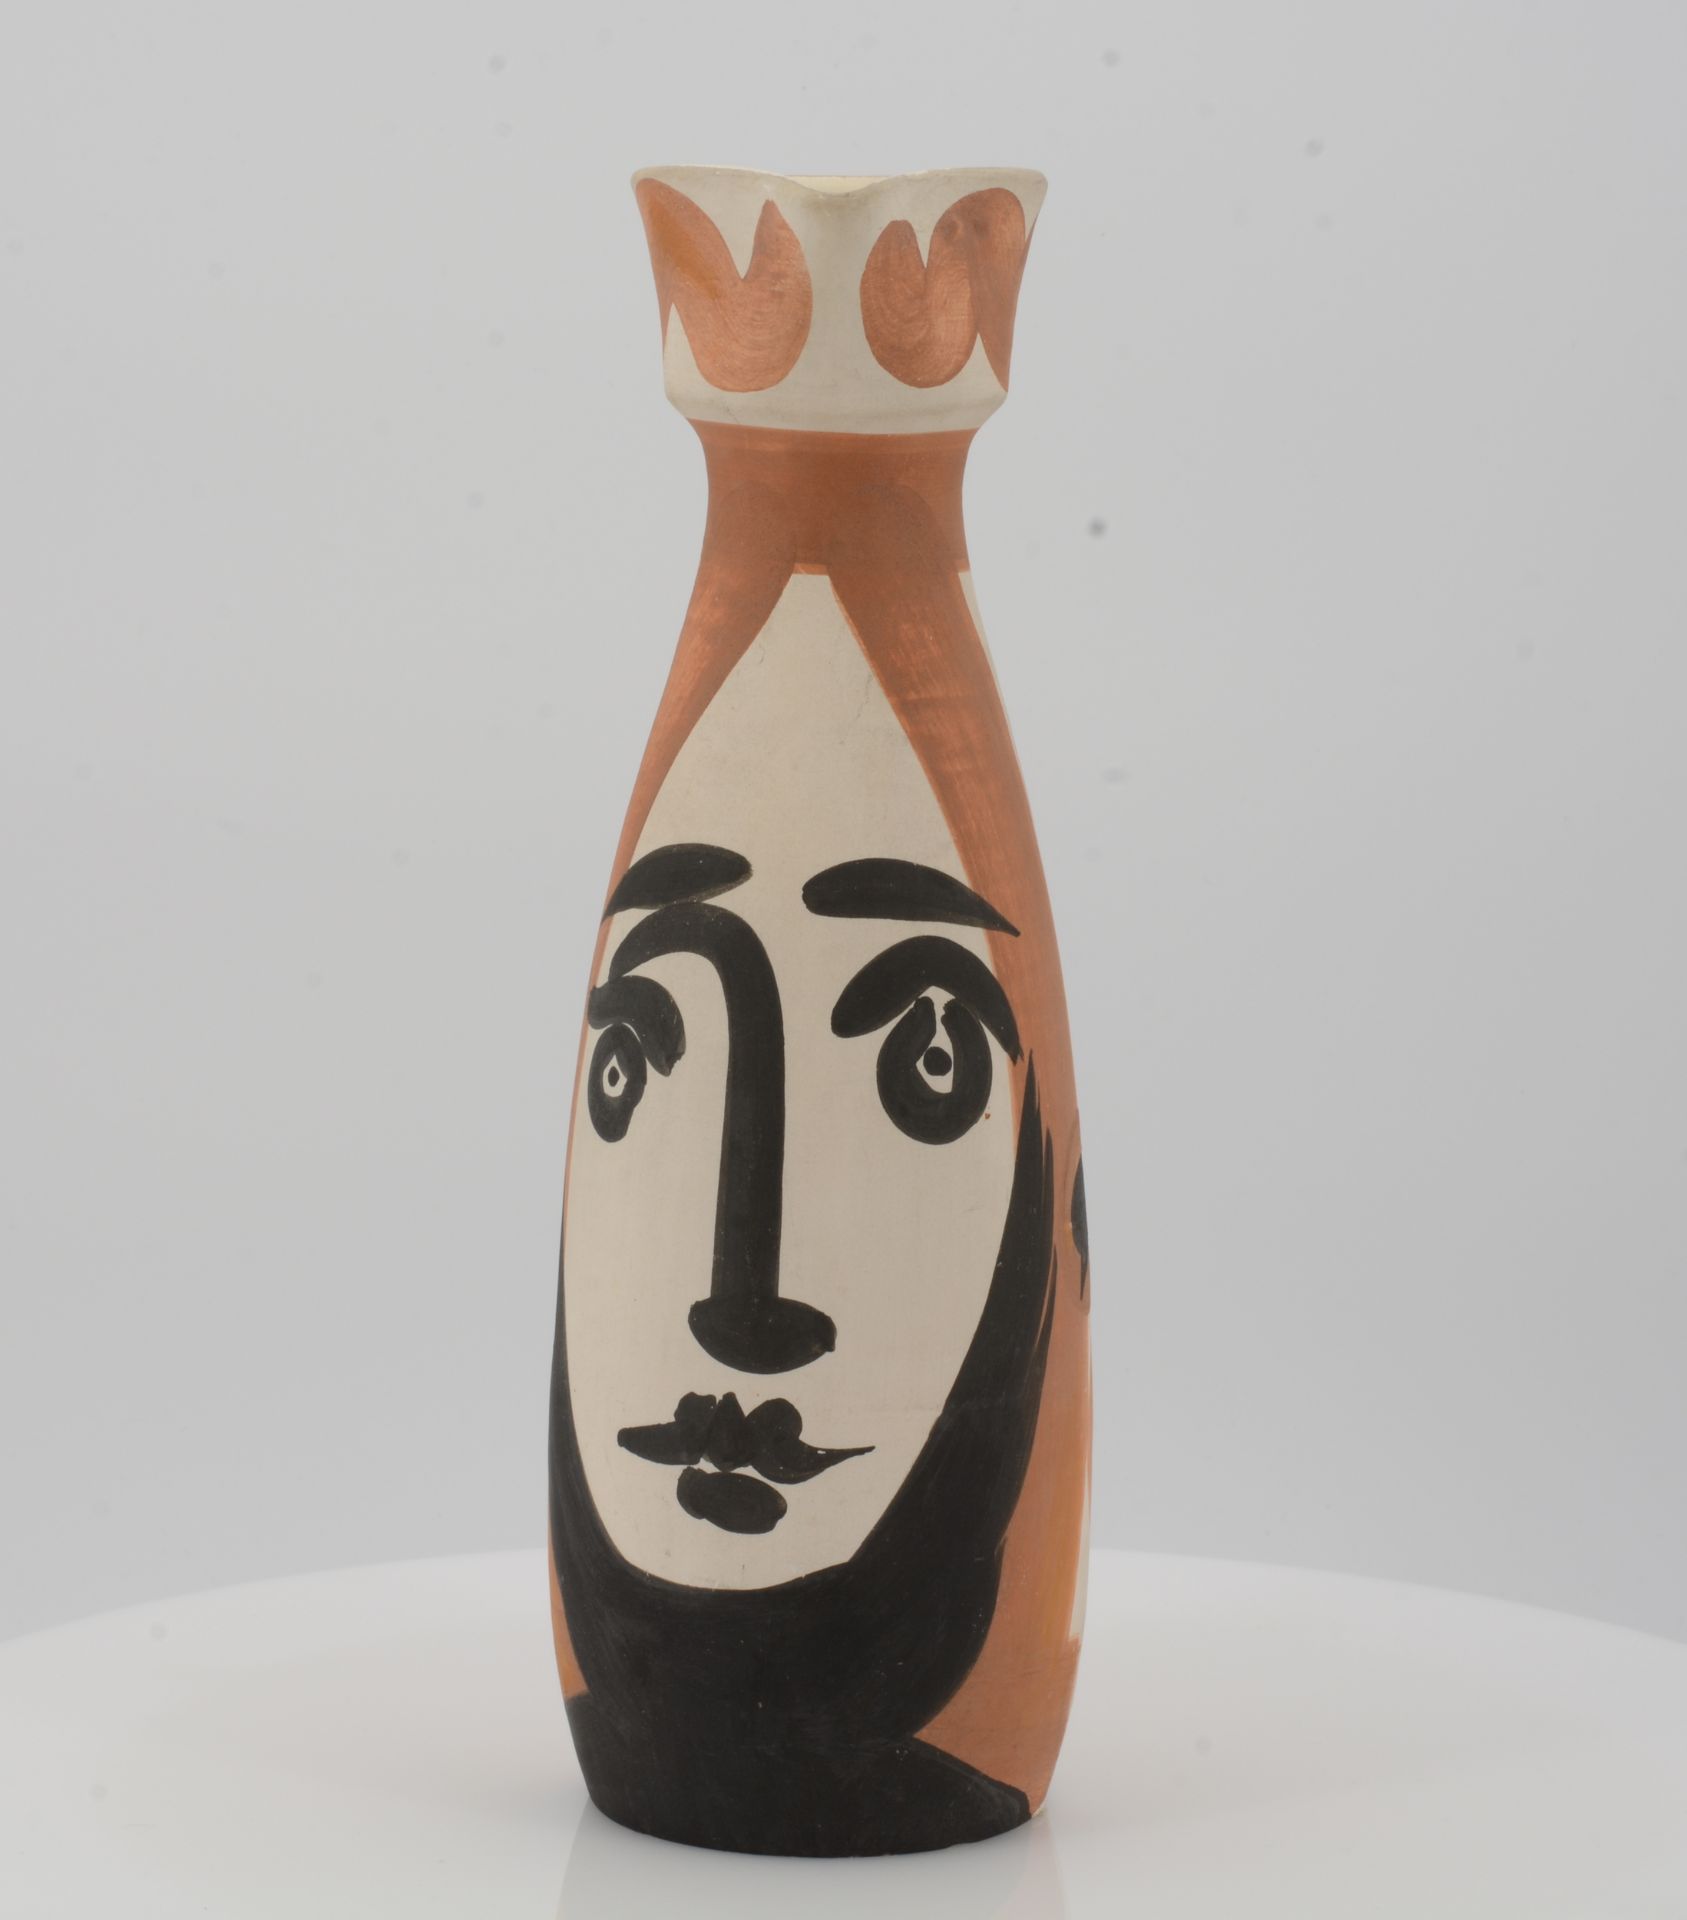 Picasso, Pablo1881 Malaga - 1973 MouginsFace. 1955. White earthenware clay, polychromed and glazed - Bild 4 aus 9